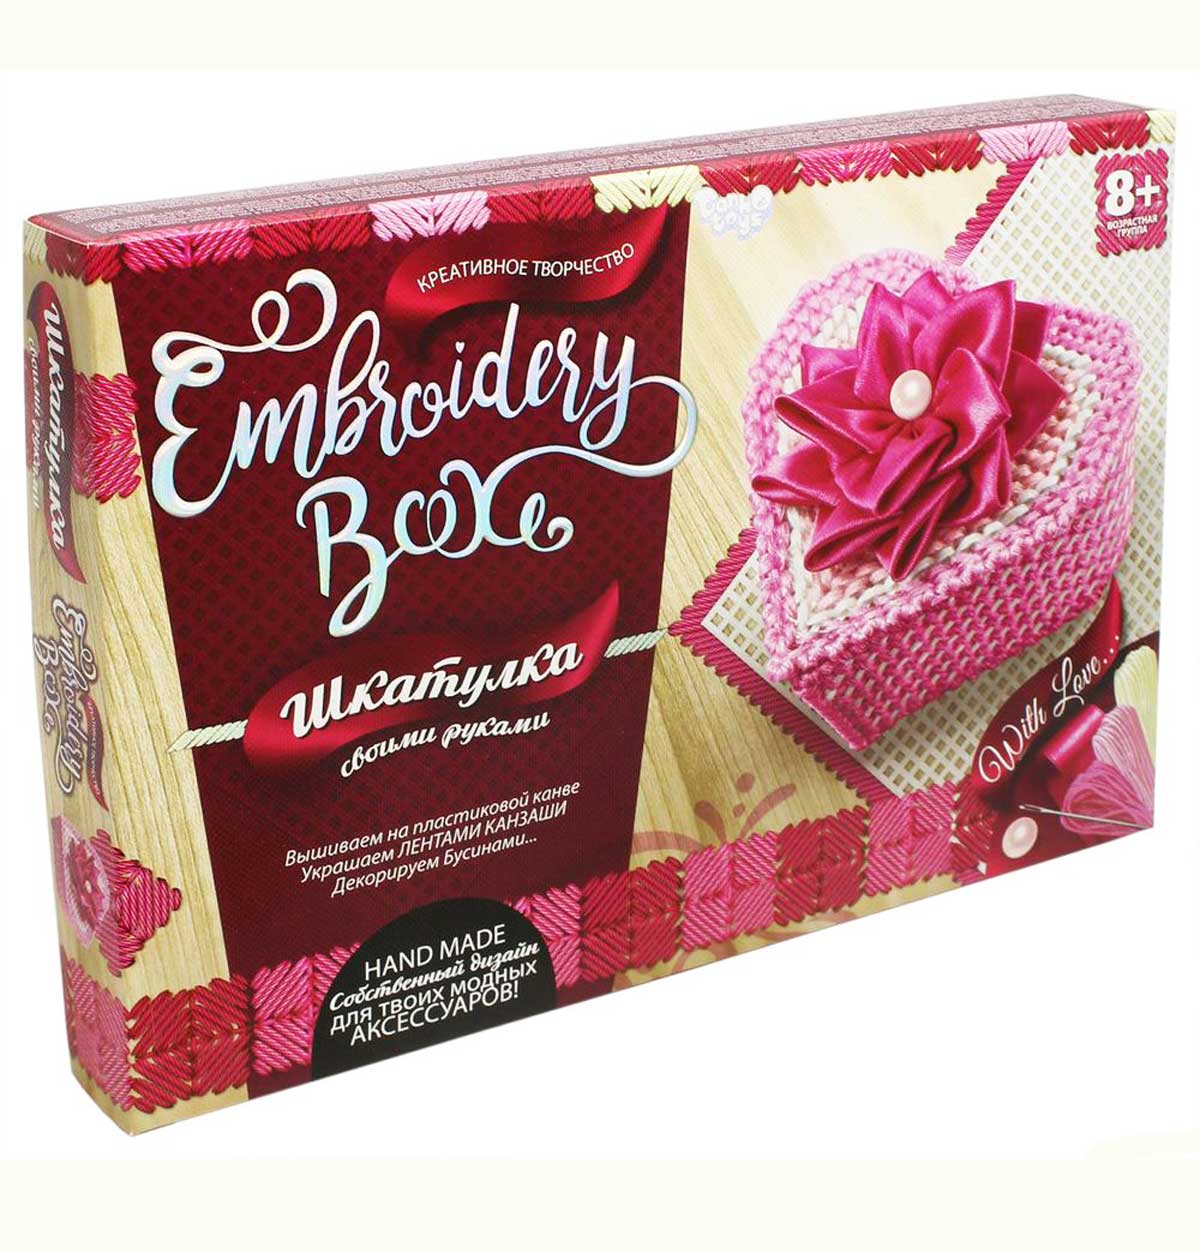 Набор для творчества шкатулка 'Embroidery Box'